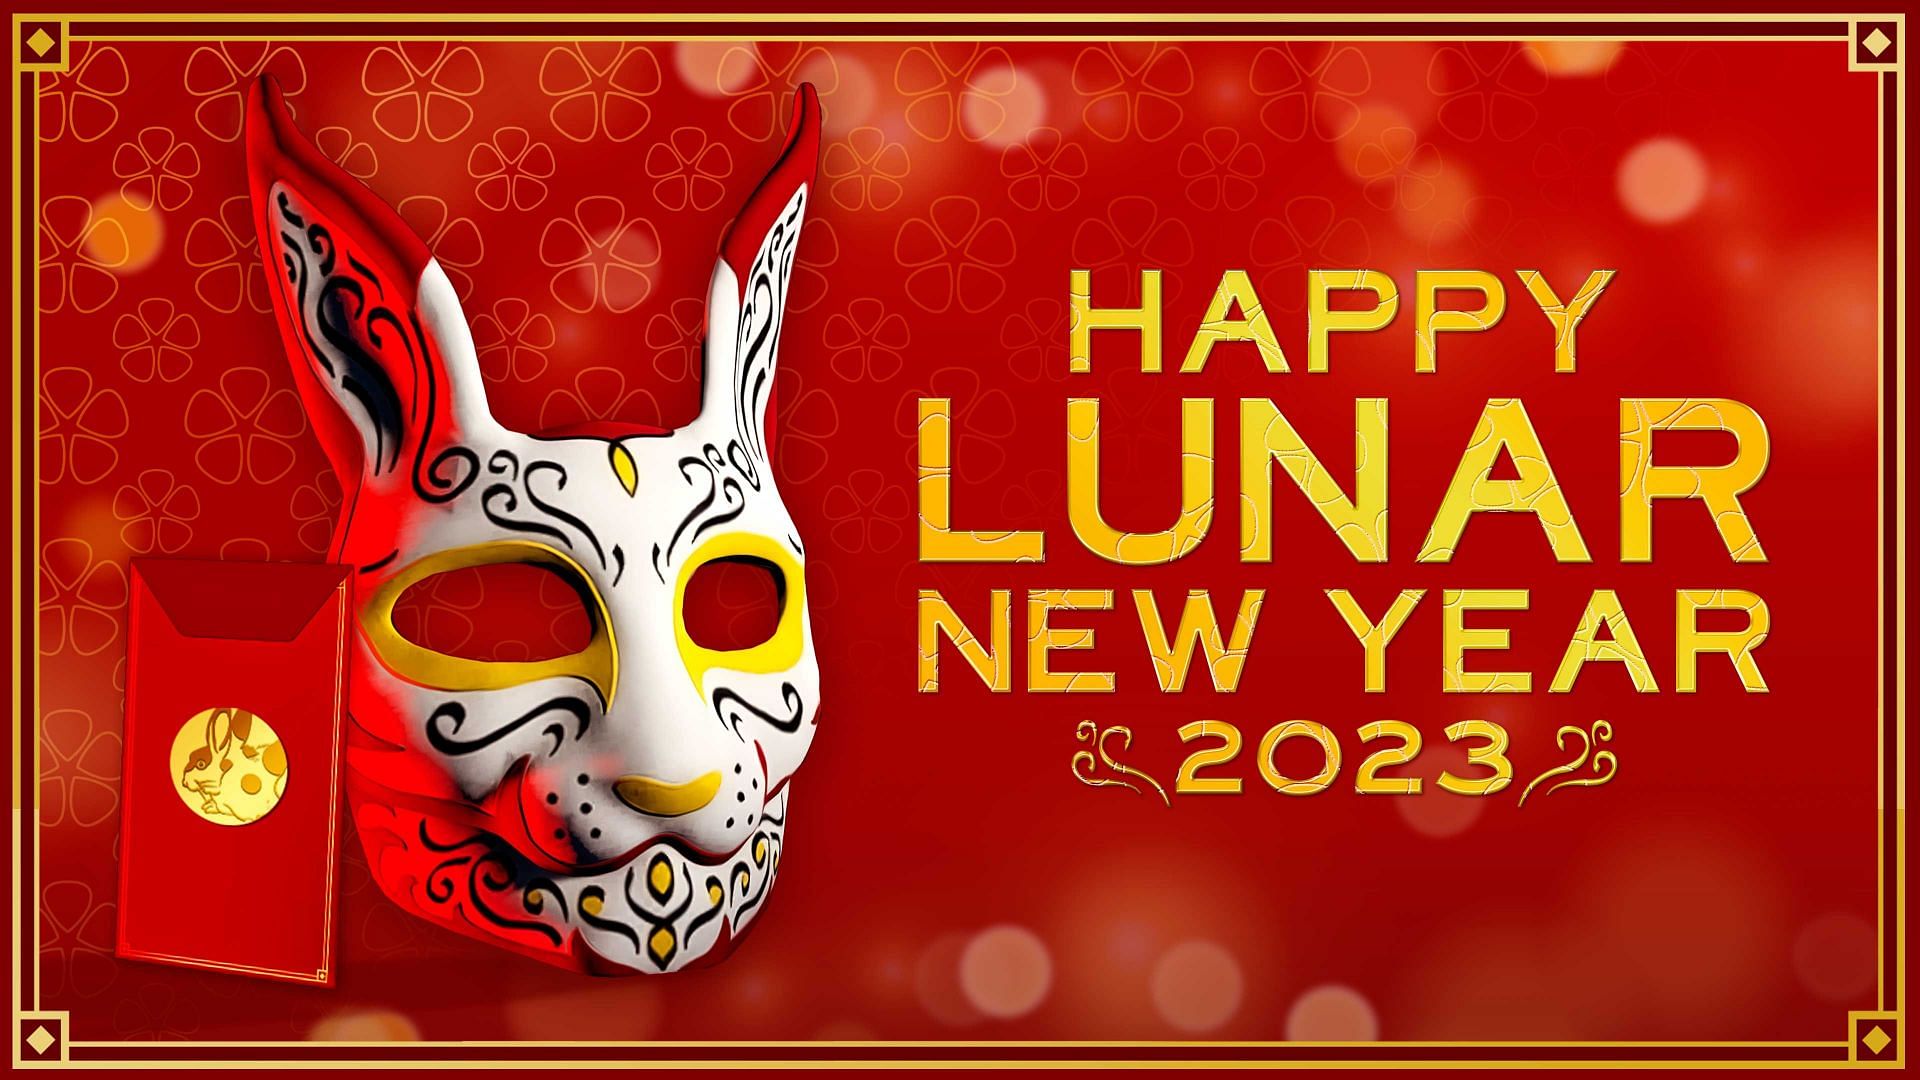 The official artwork for the Lunar New Year Celebration (Image via Rockstar Games)